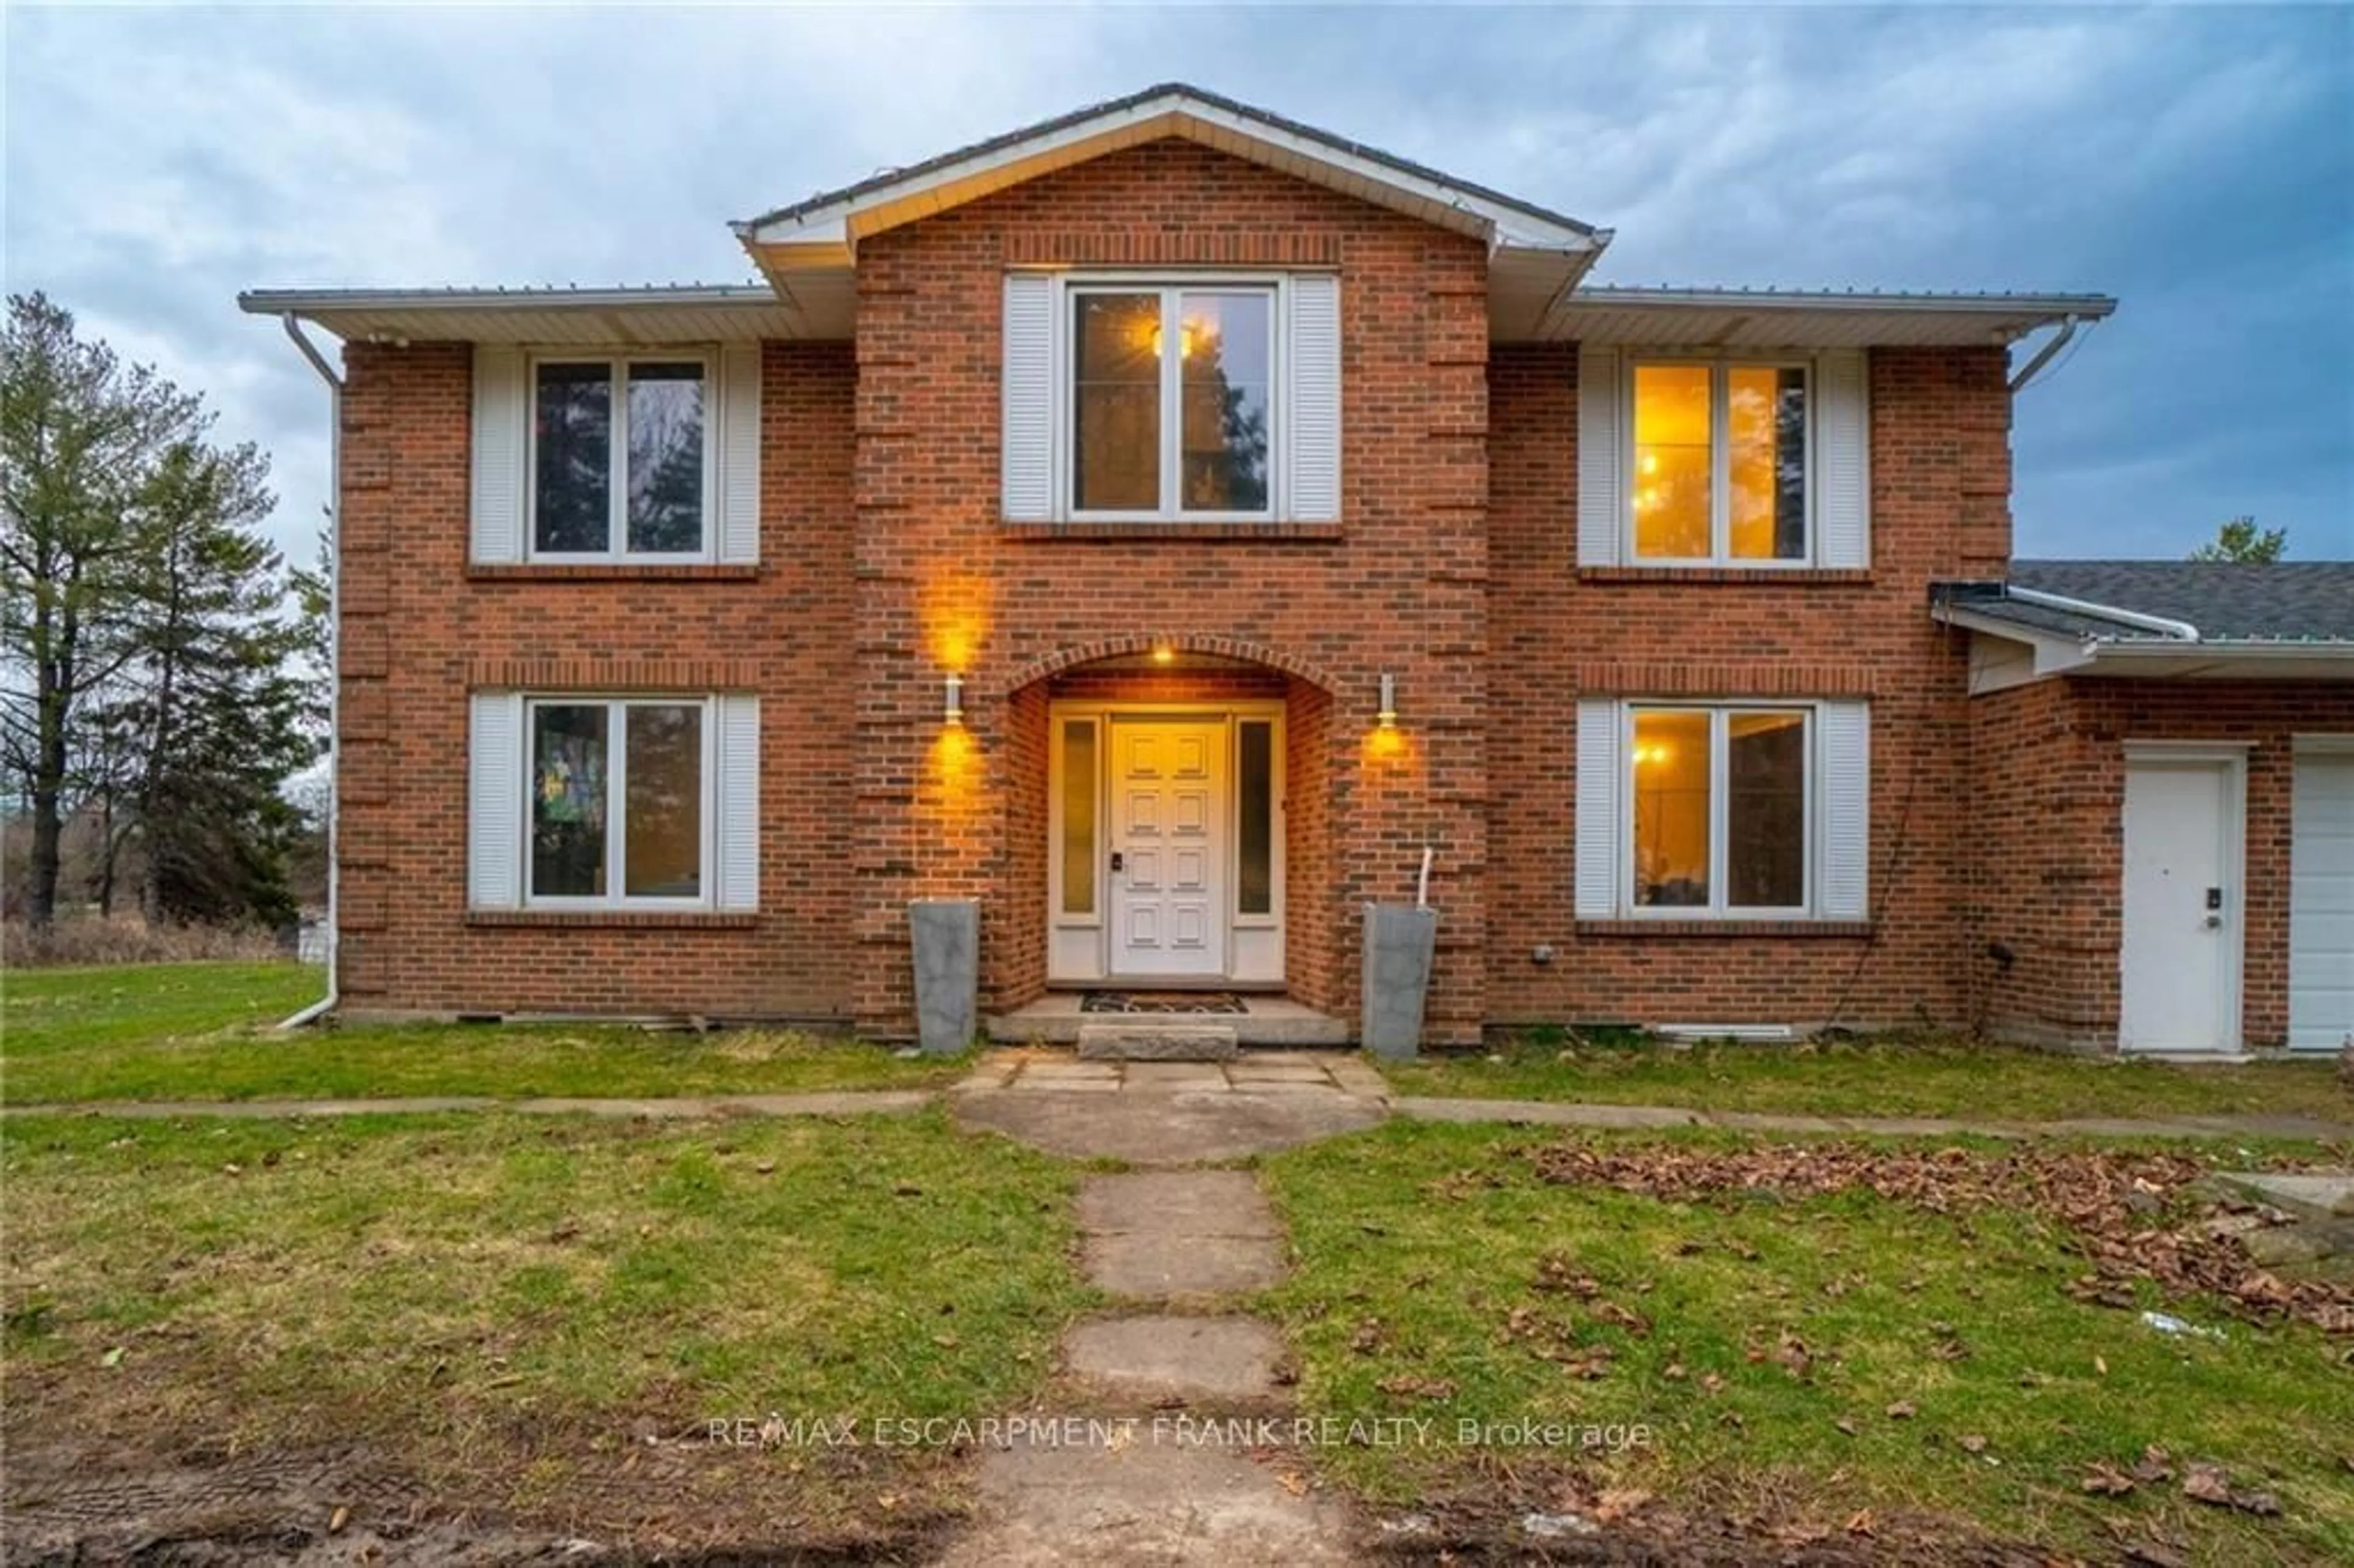 Home with brick exterior material for 2035 Fletcher Rd, Hamilton Ontario L0R 1C0